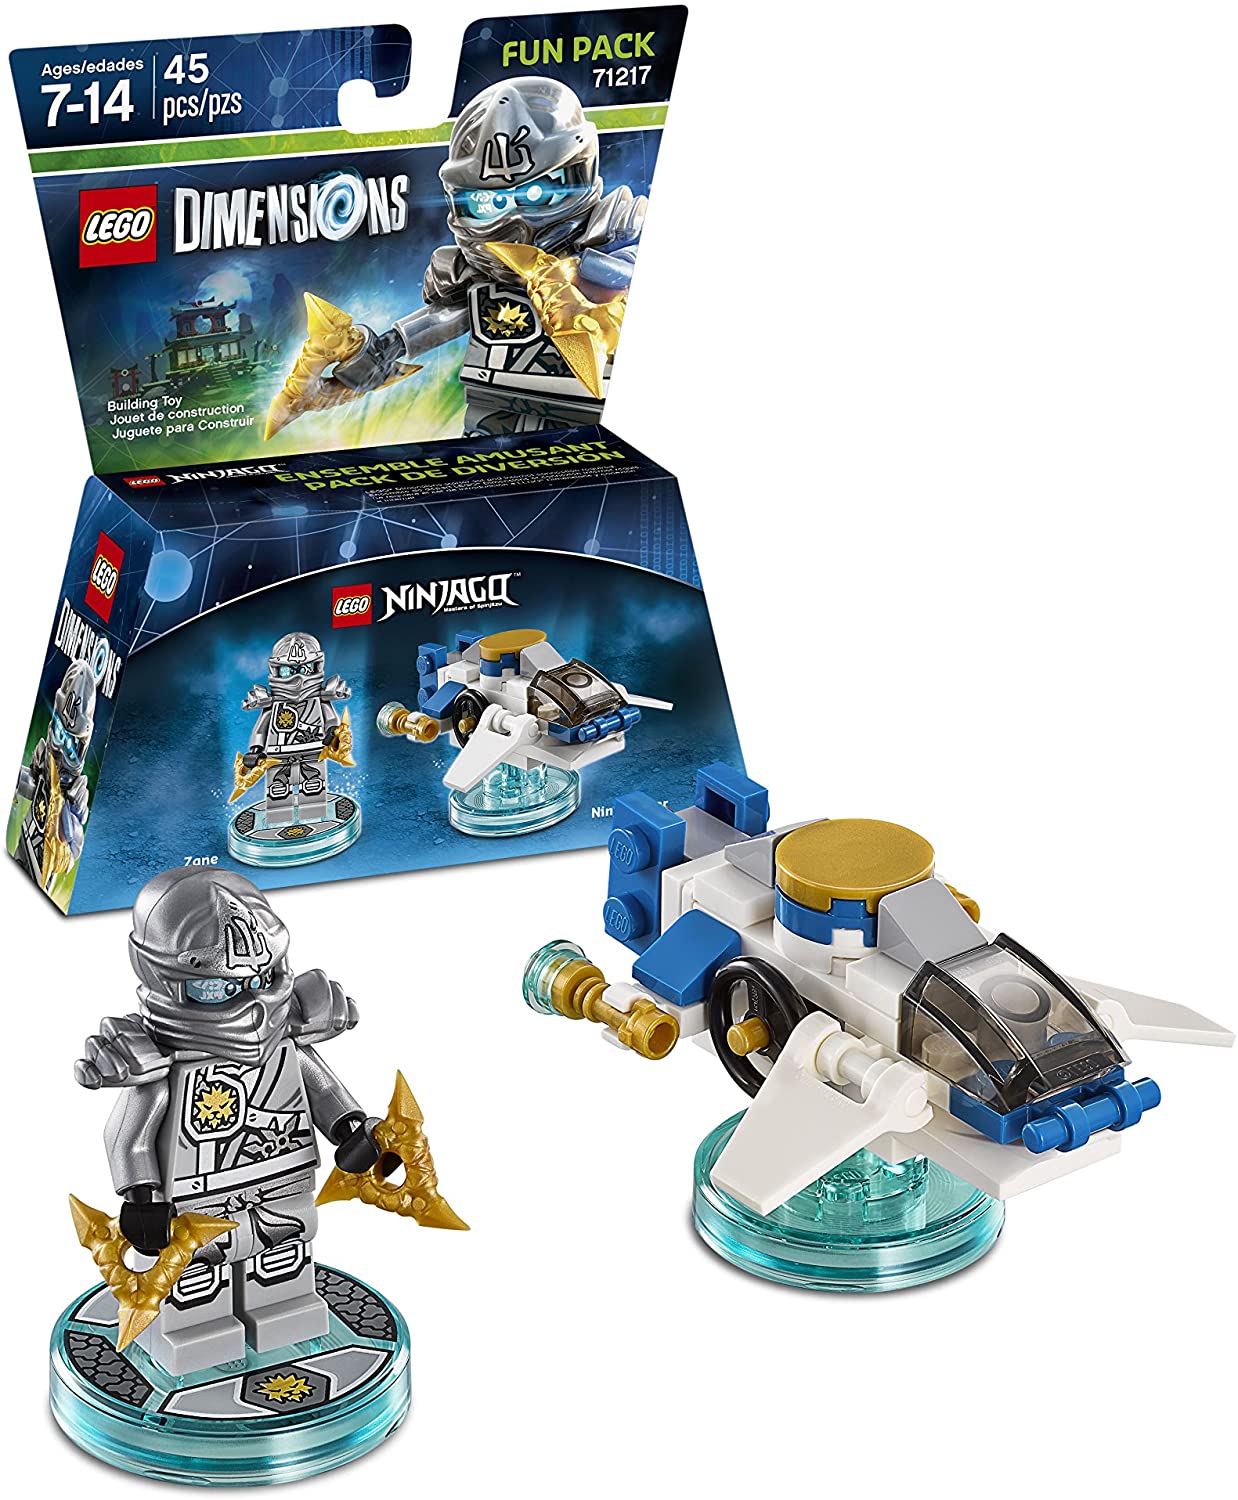 LEGO Dimensions - Fun Pack (71217) - LEGO Ninjago (Zane, NinjaCopter)